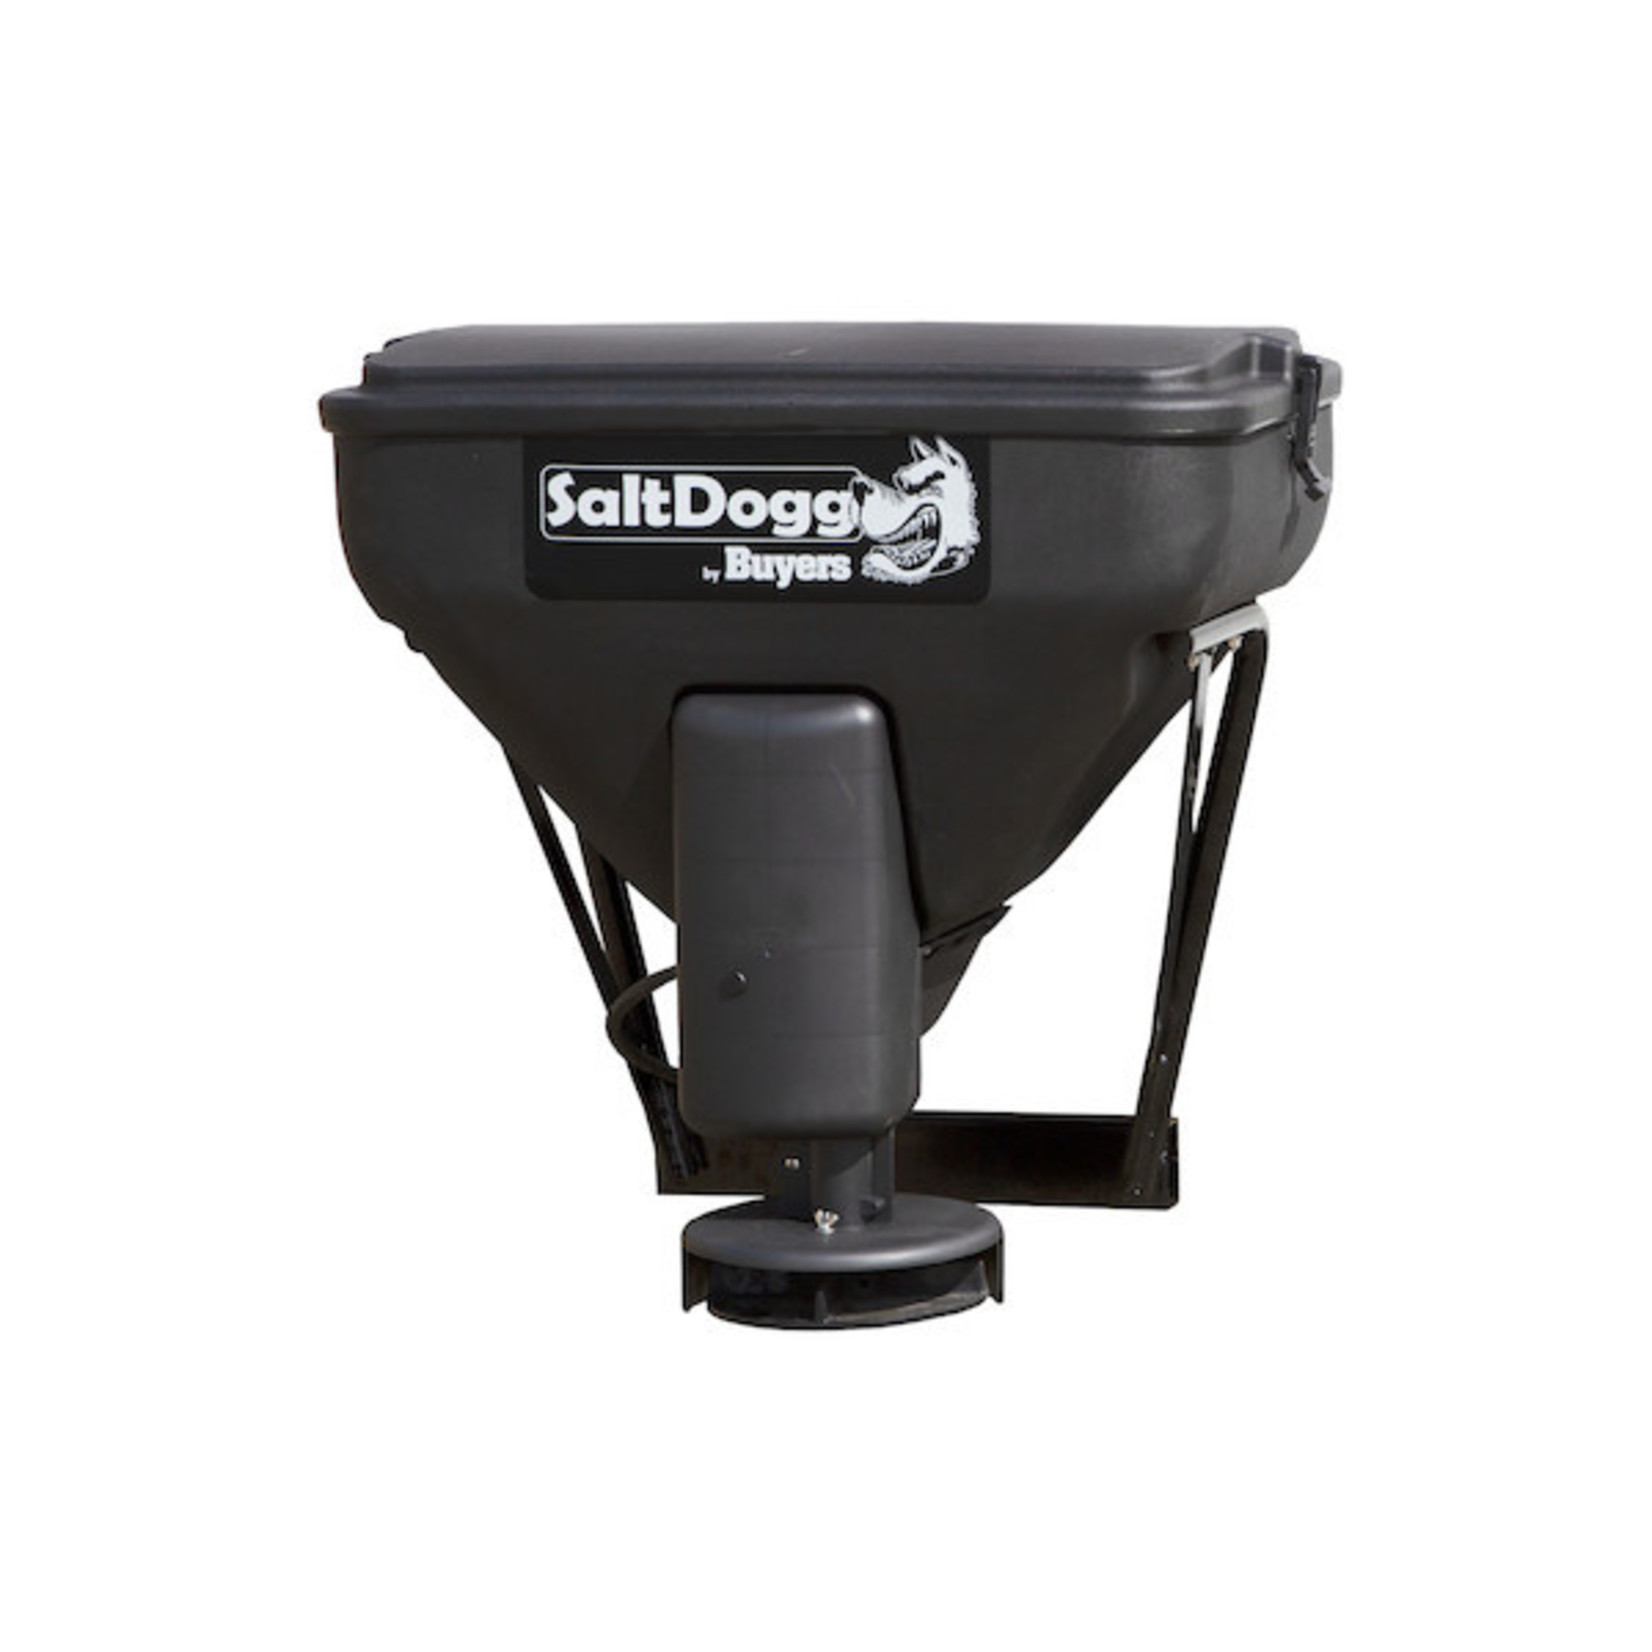 SaltDogg SaltDogg® TGS02 4 Cubic Foot Tailgate Spreader